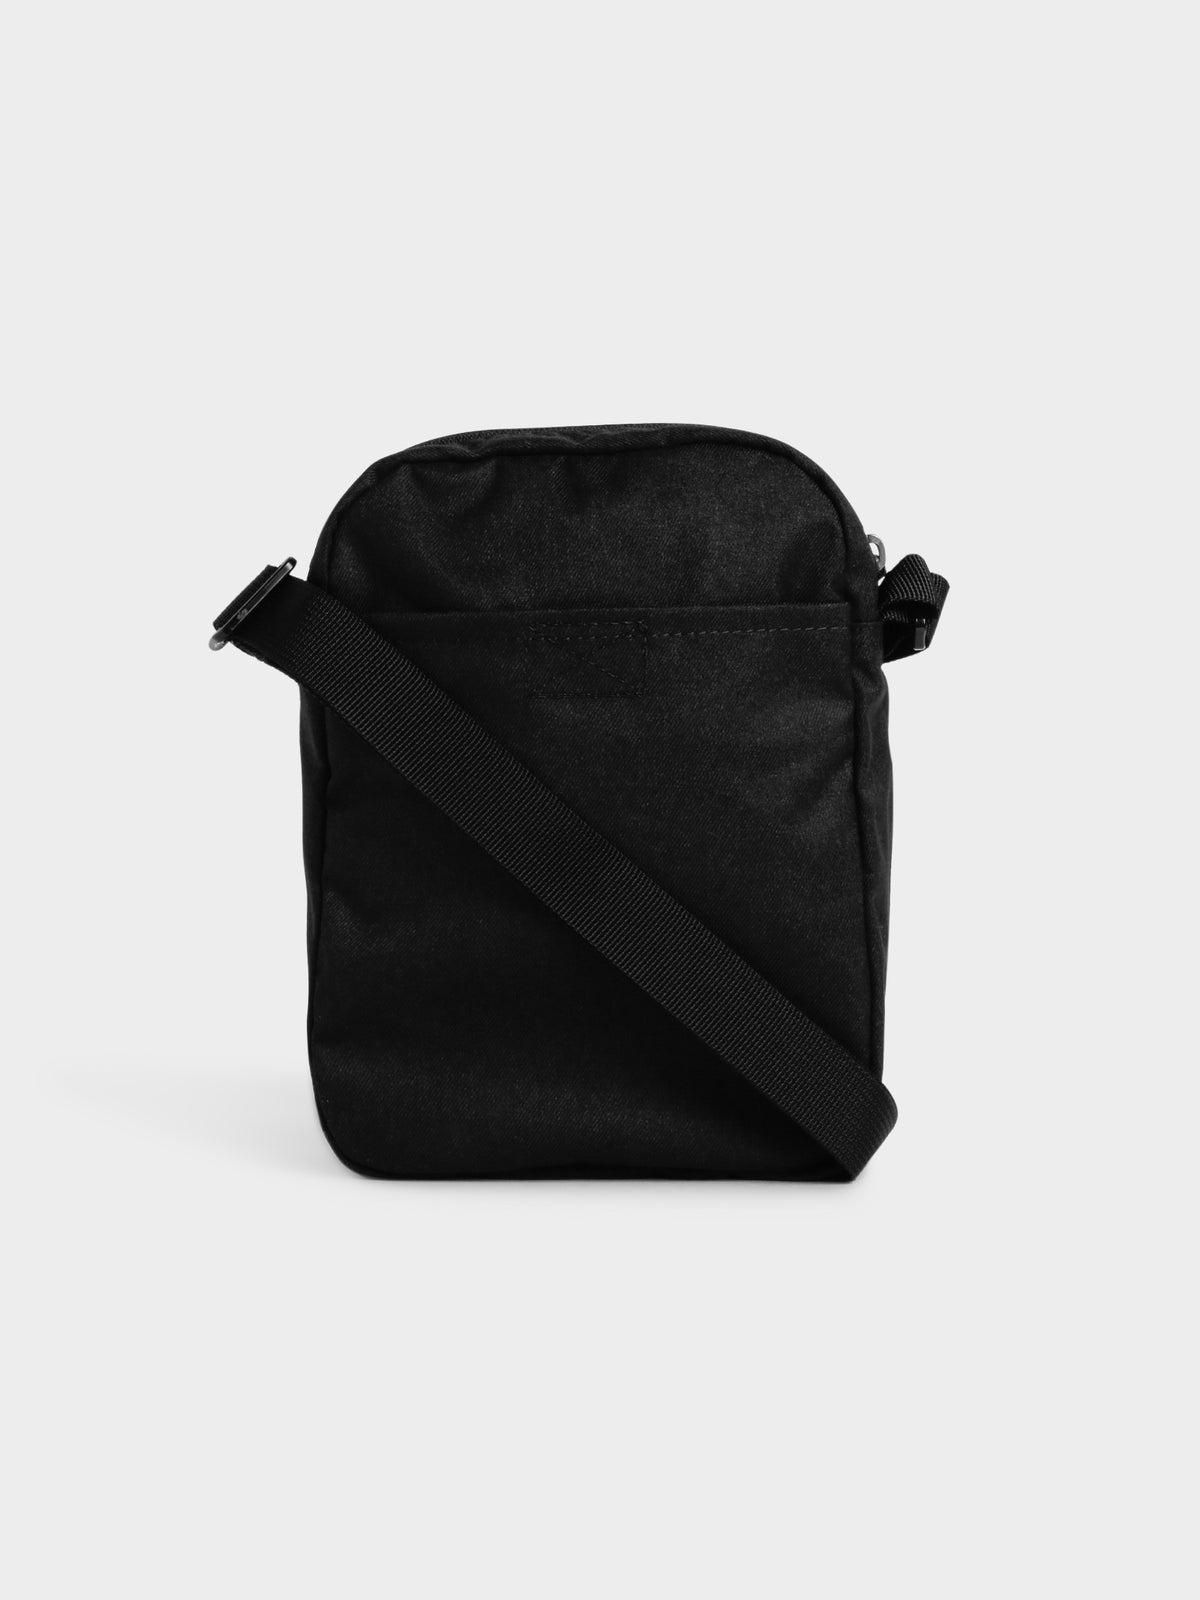 Tech Small Bag in Black